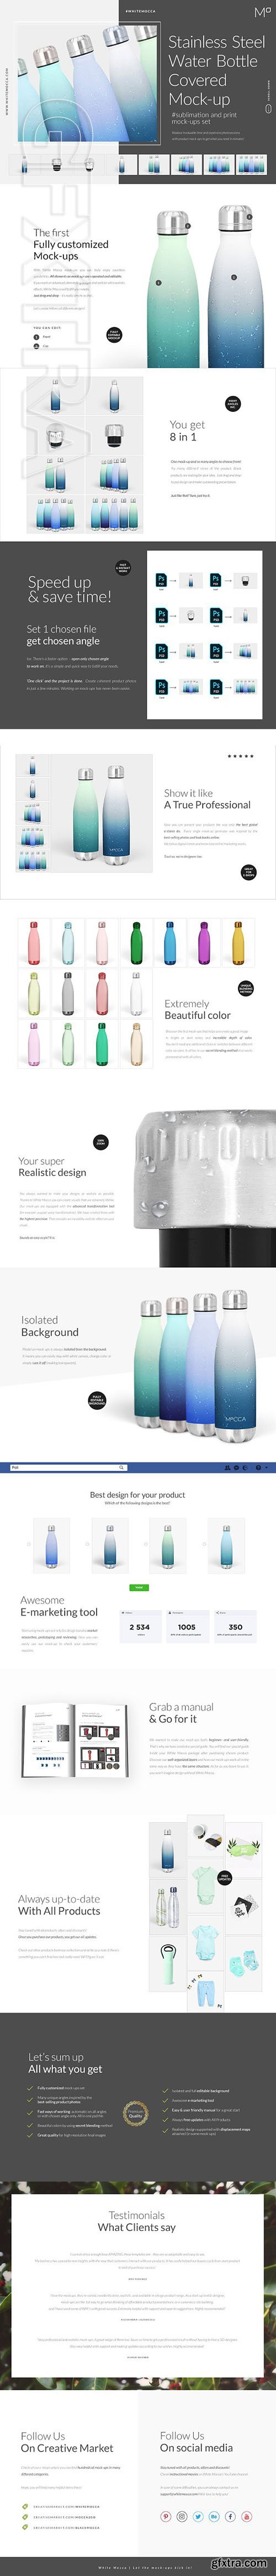 CreativeMarket - Stainless Steel Water Bottle Mockup 3406394